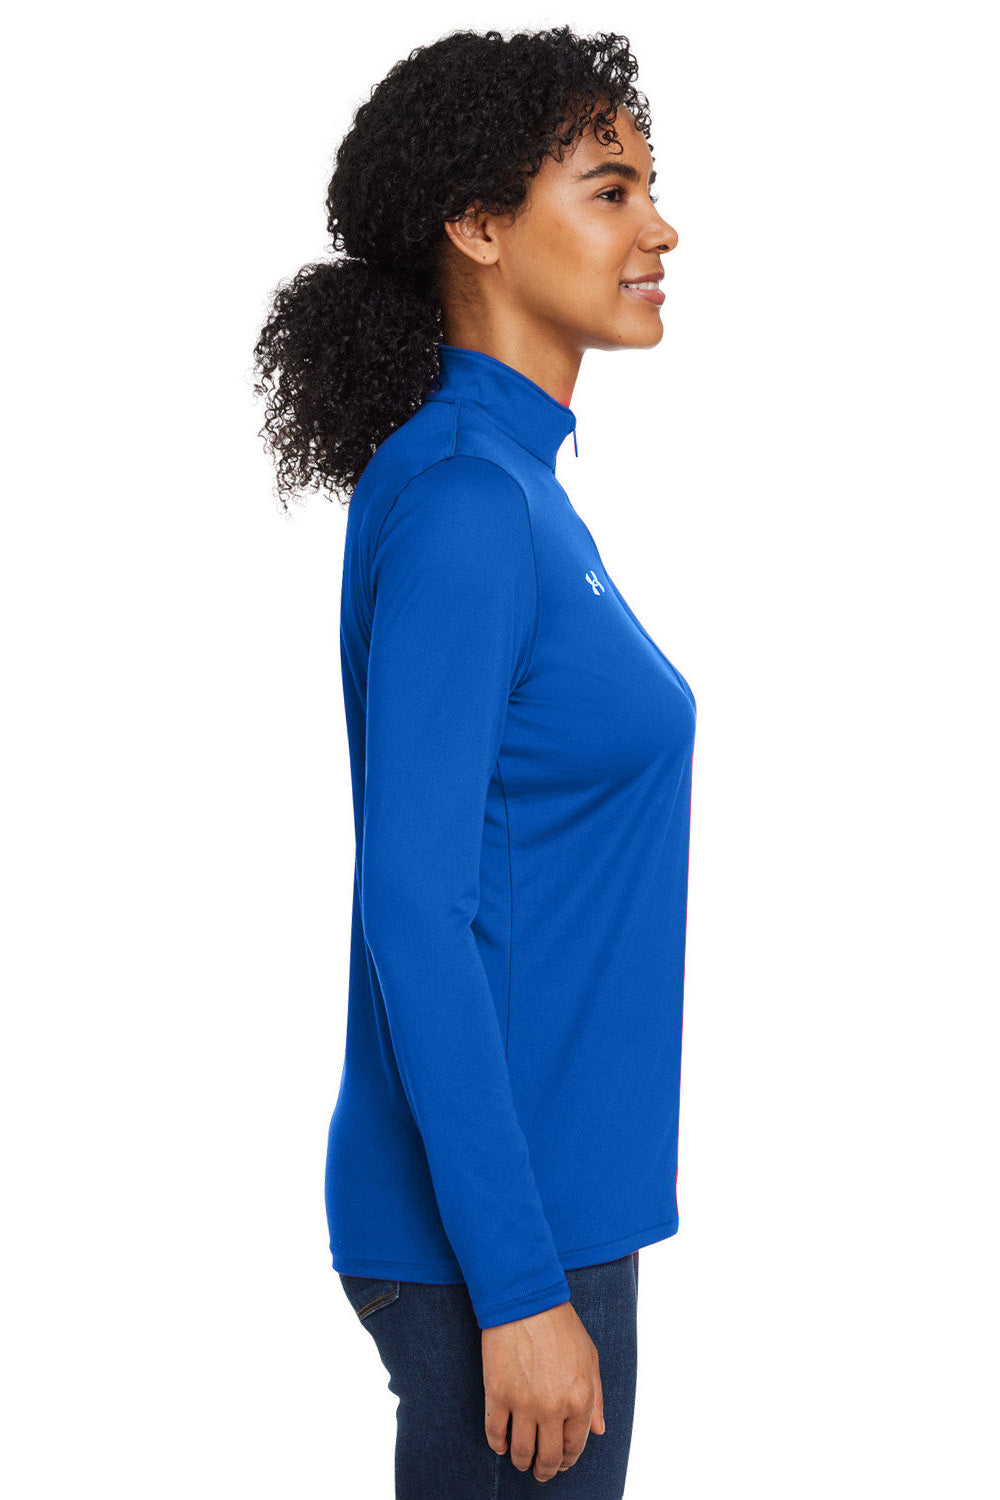 Under Armour 1376862 Womens Team Tech Moisture Wicking 1/4 Zip Sweatshirt Royal Blue Model Side